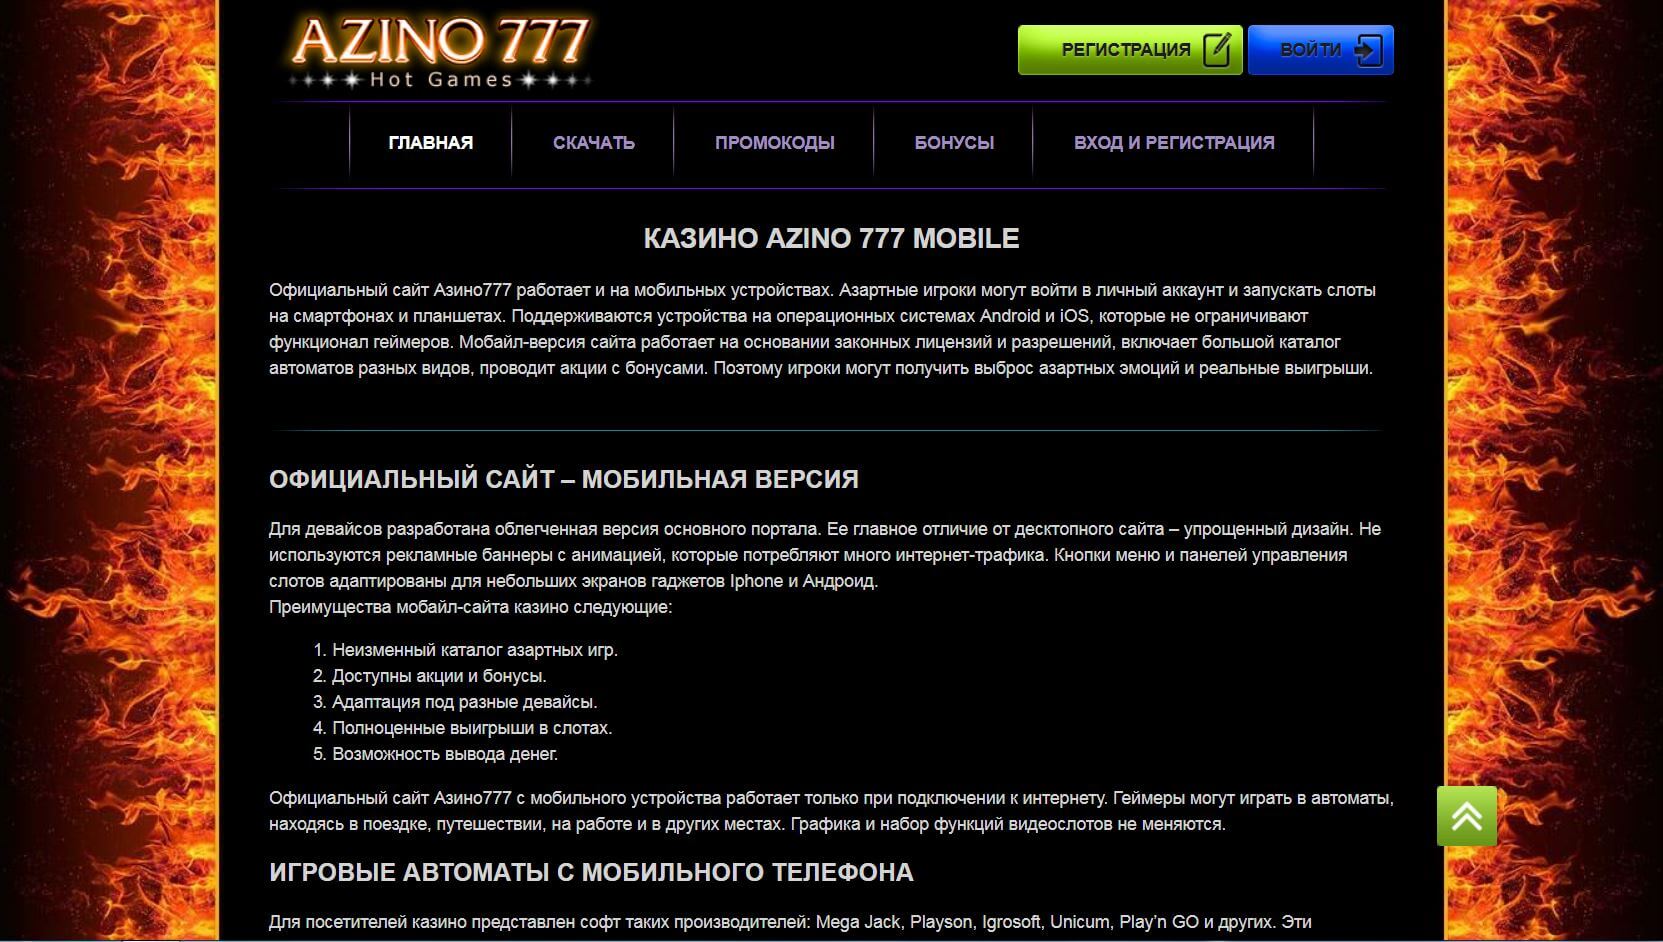 Азино 777 зеркало azino777 slots now com. Азино777 вывод денег.